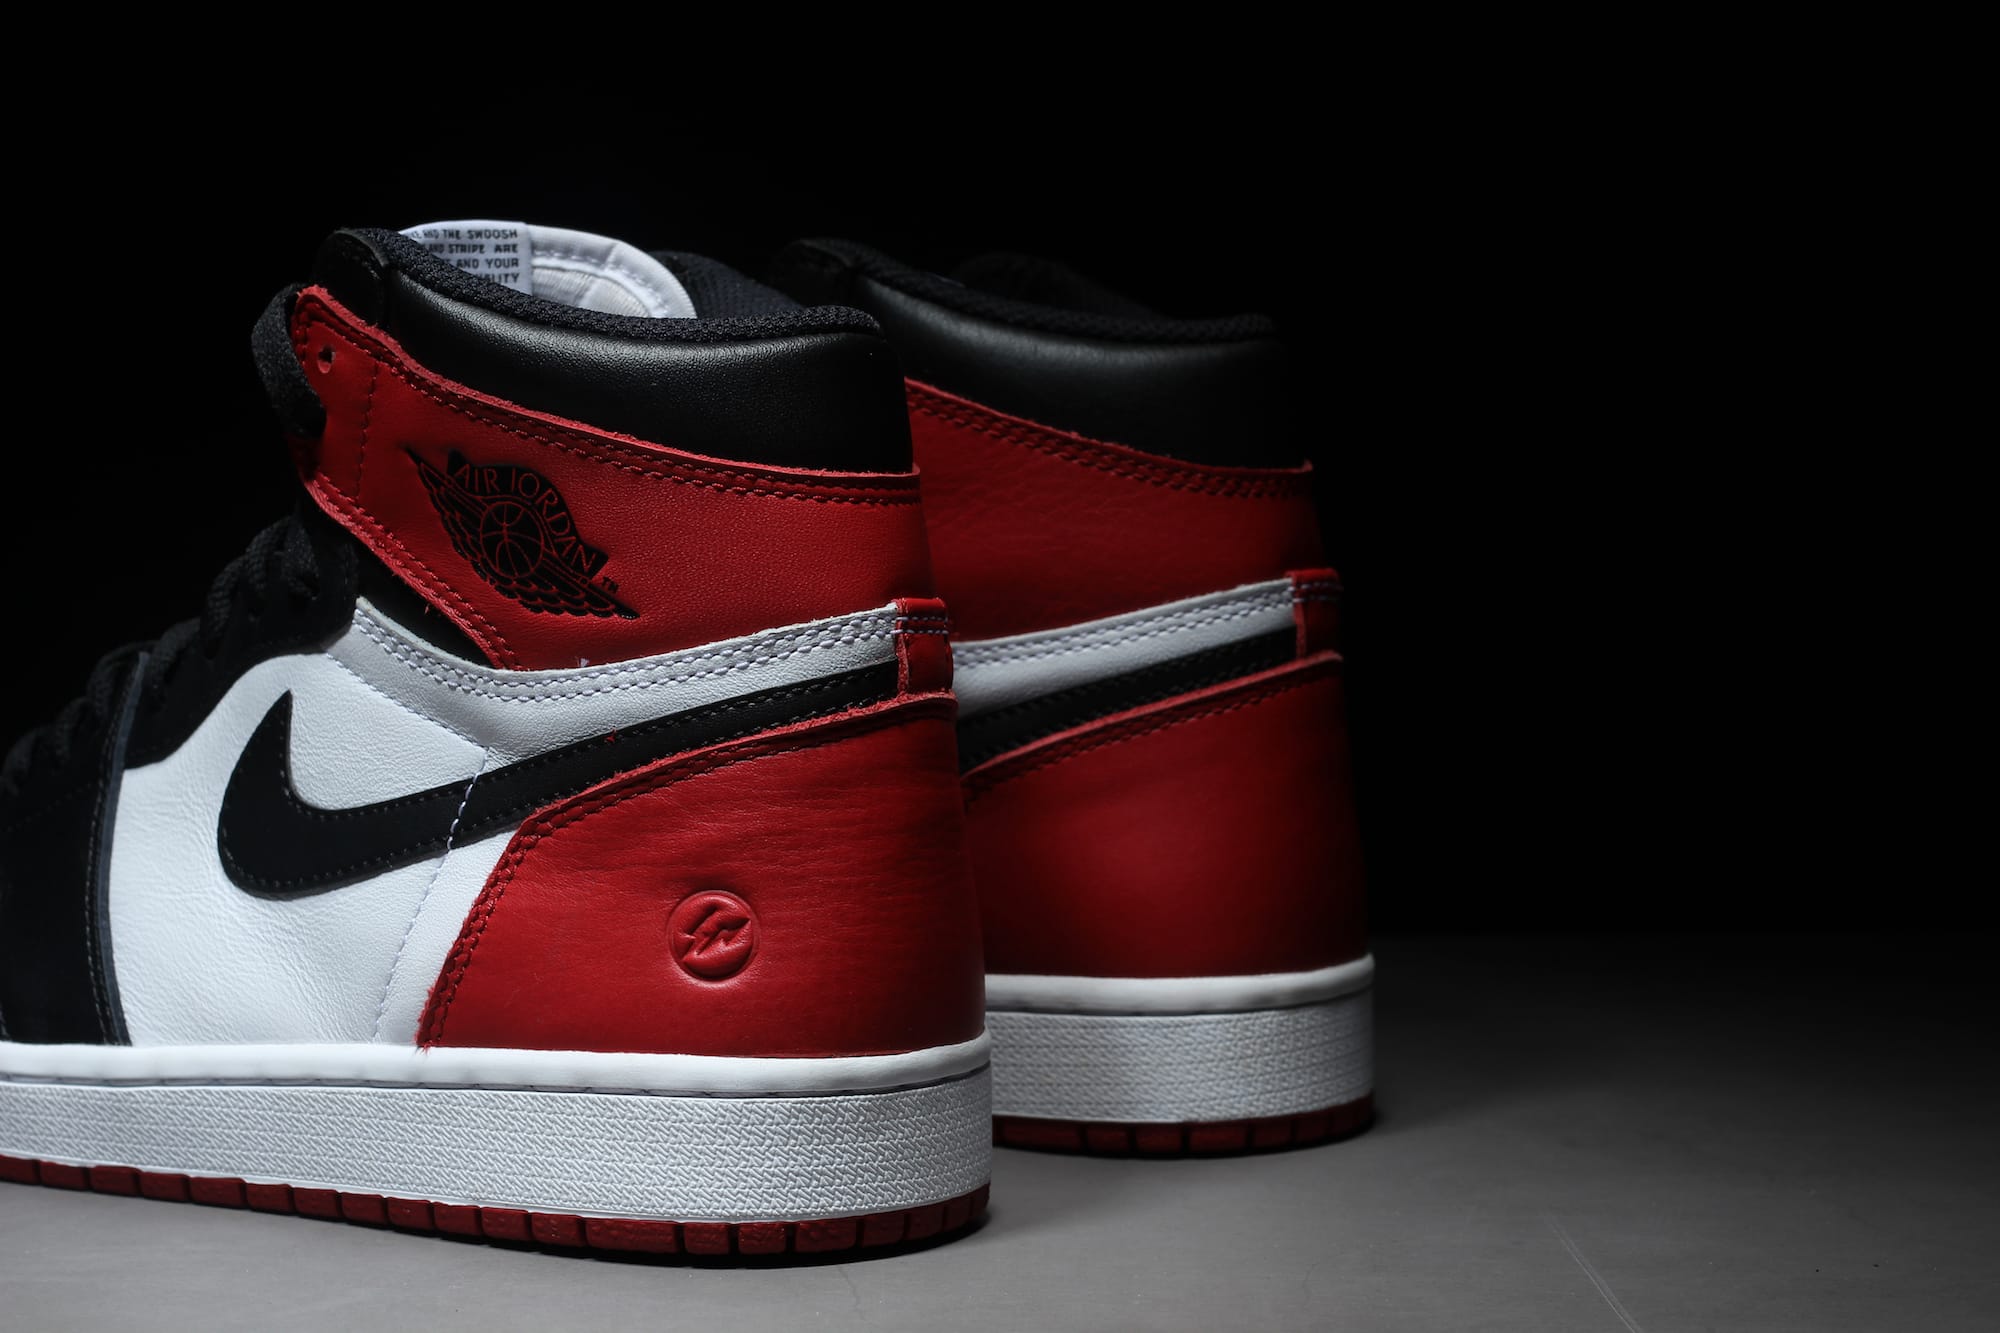 Update: 藤原浩否認fragment design x Air Jordan 1 將推出「Black Toe